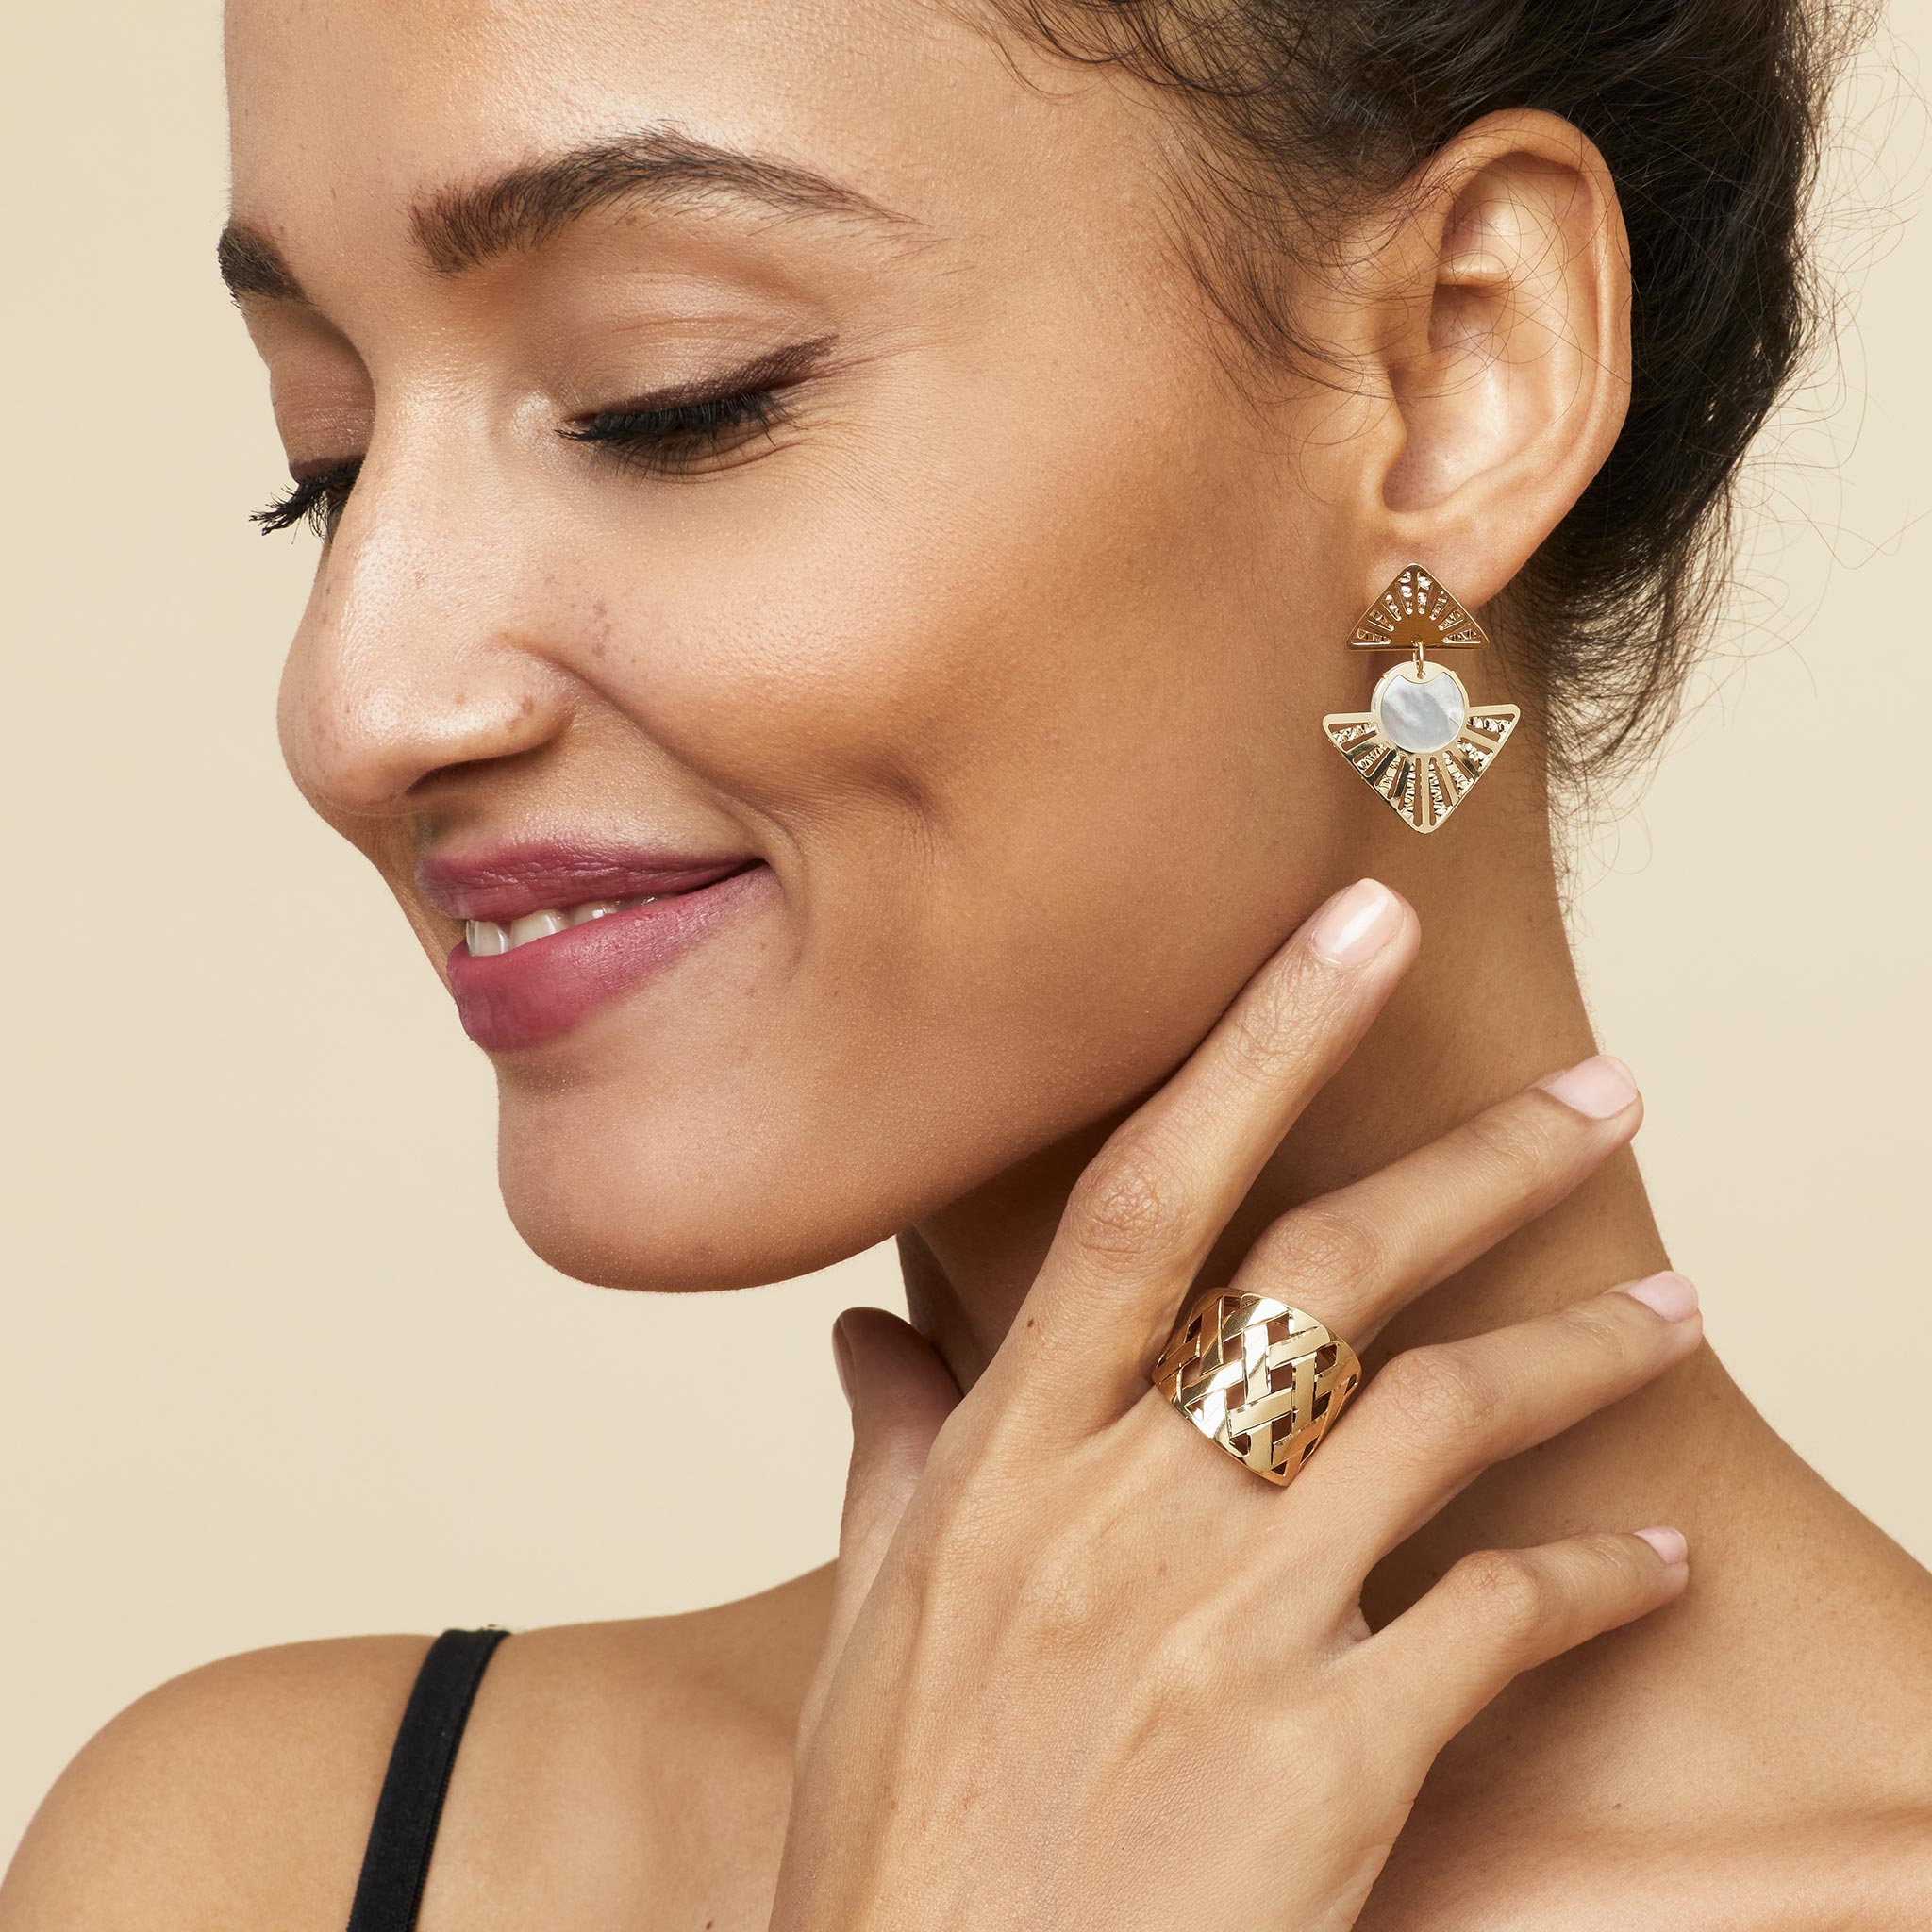 Gold earrings designs|| basket ring earrings designs for women/girls ||  stylish gold ring designs - YouTube